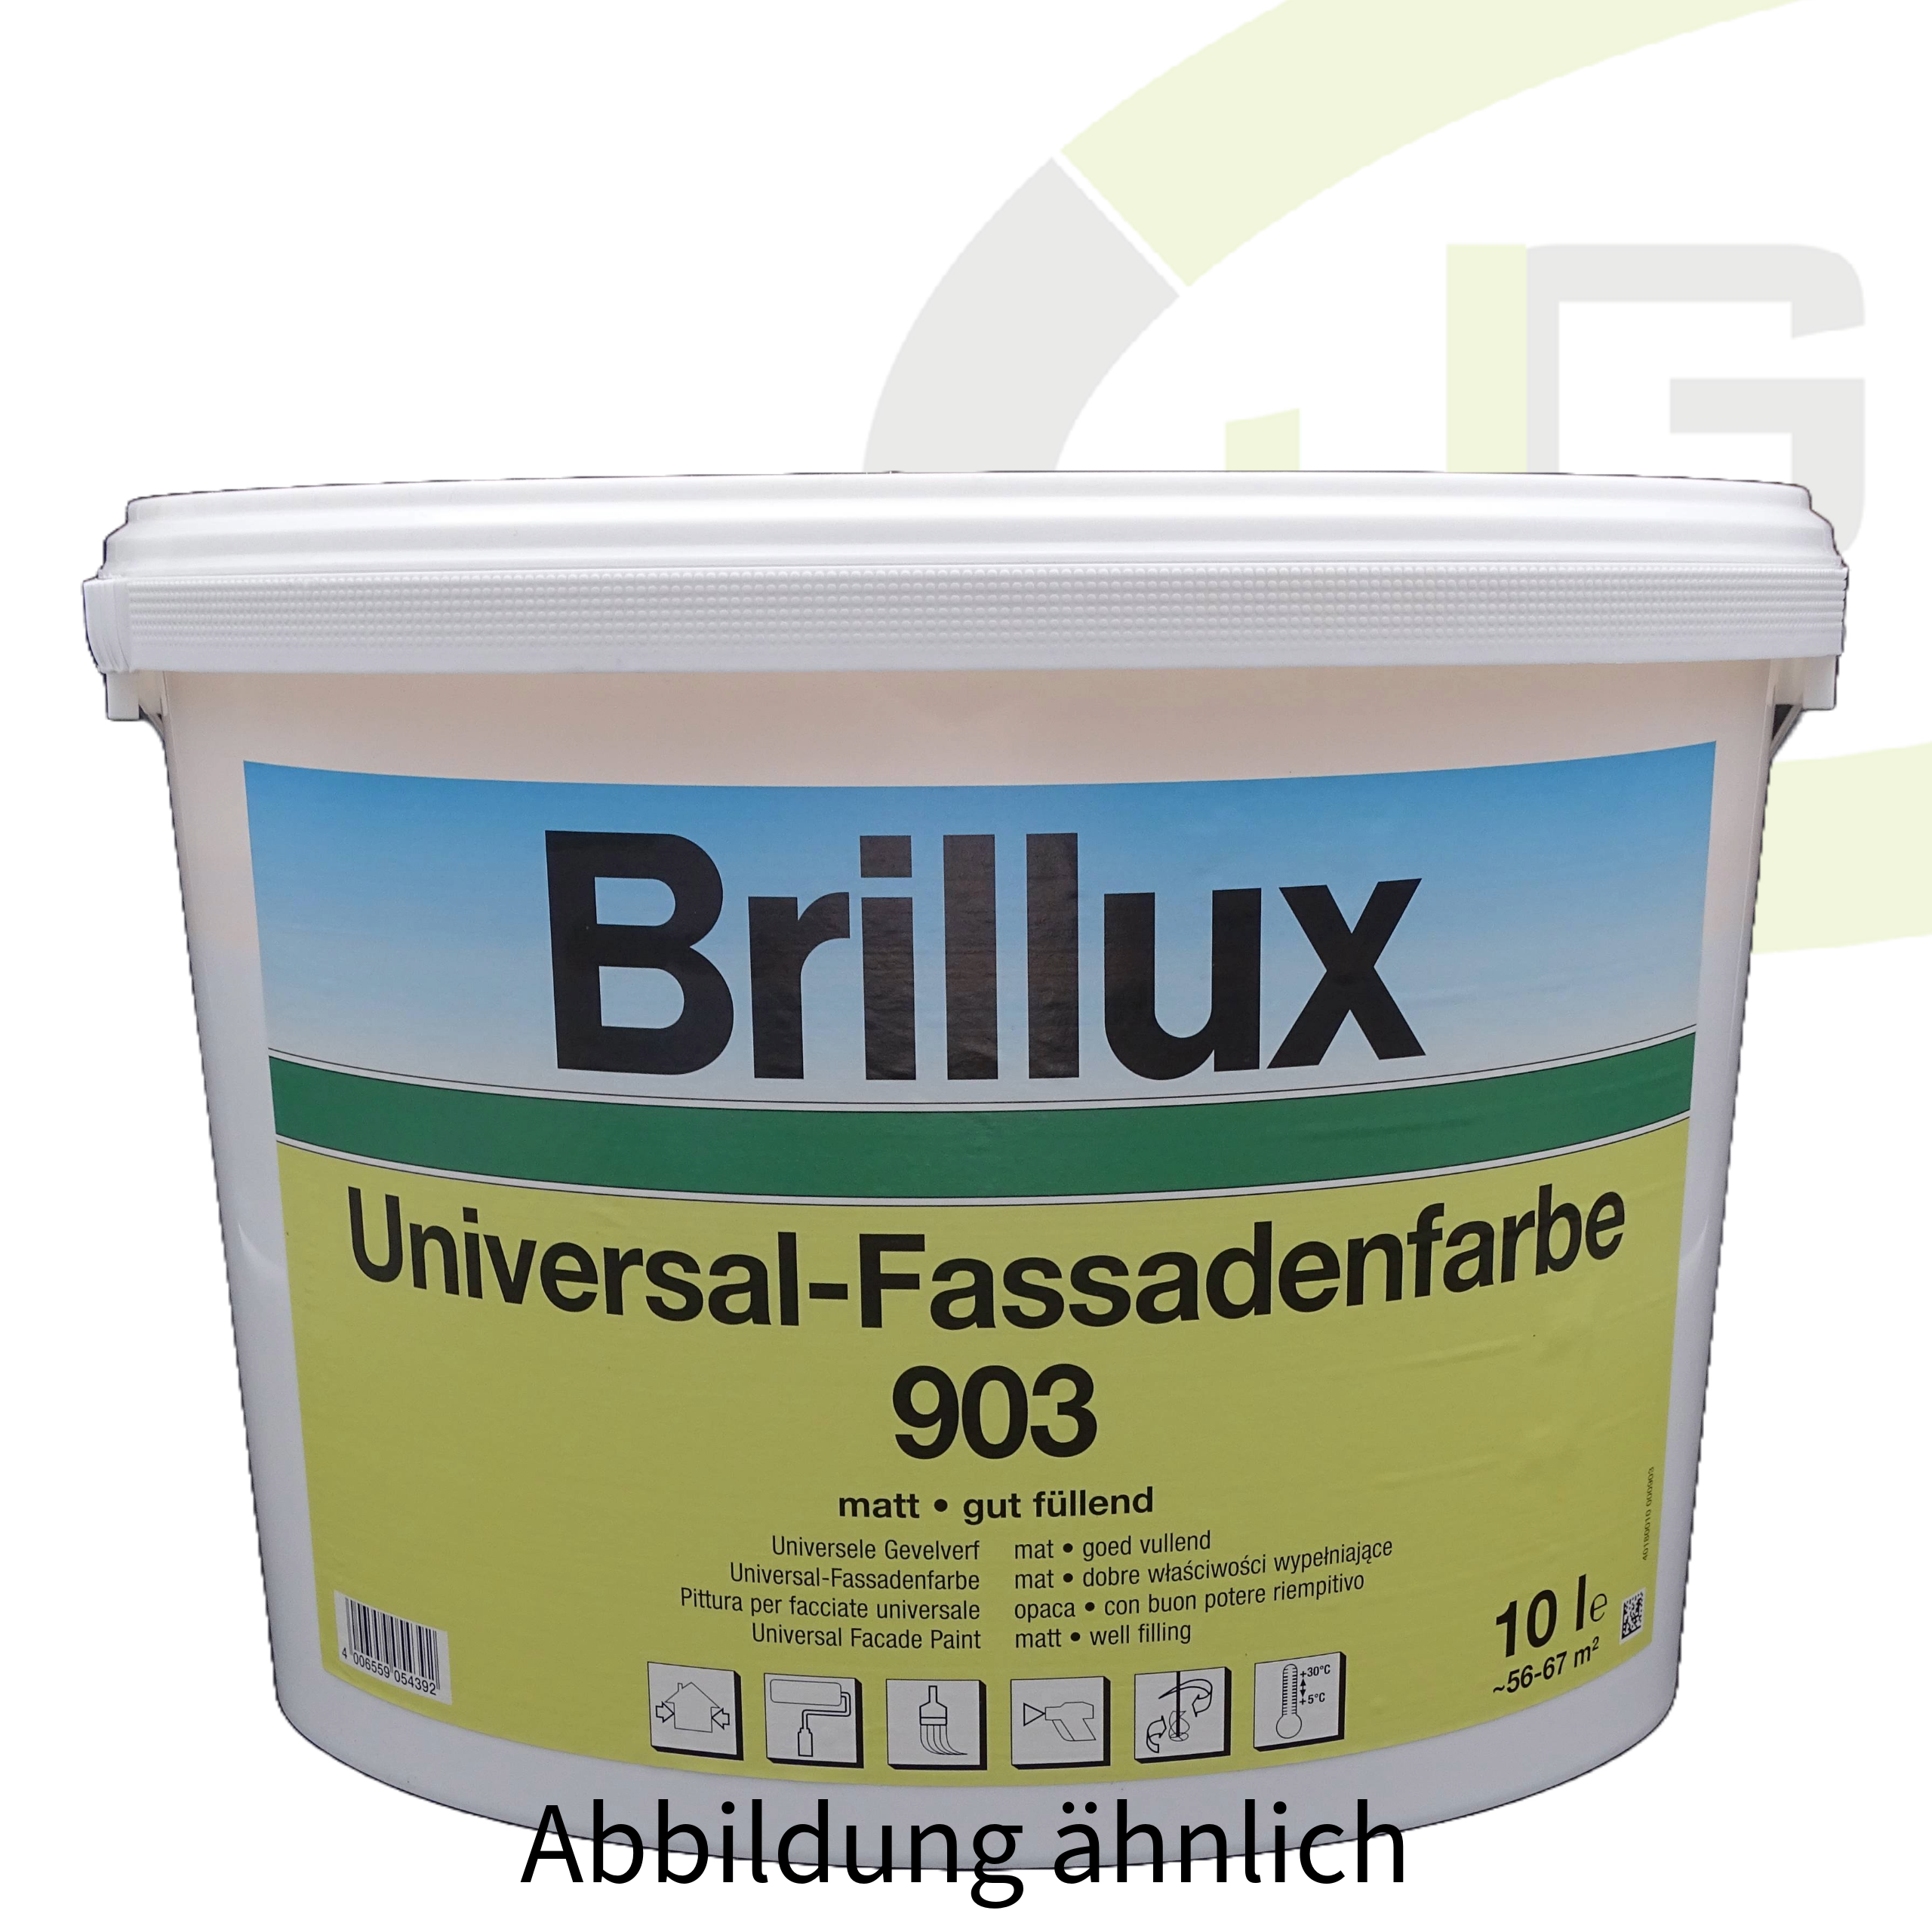 Brillux Universal-Fassadenfarbe 903 weiß - 15.00 LTR / Fassadenfarbe